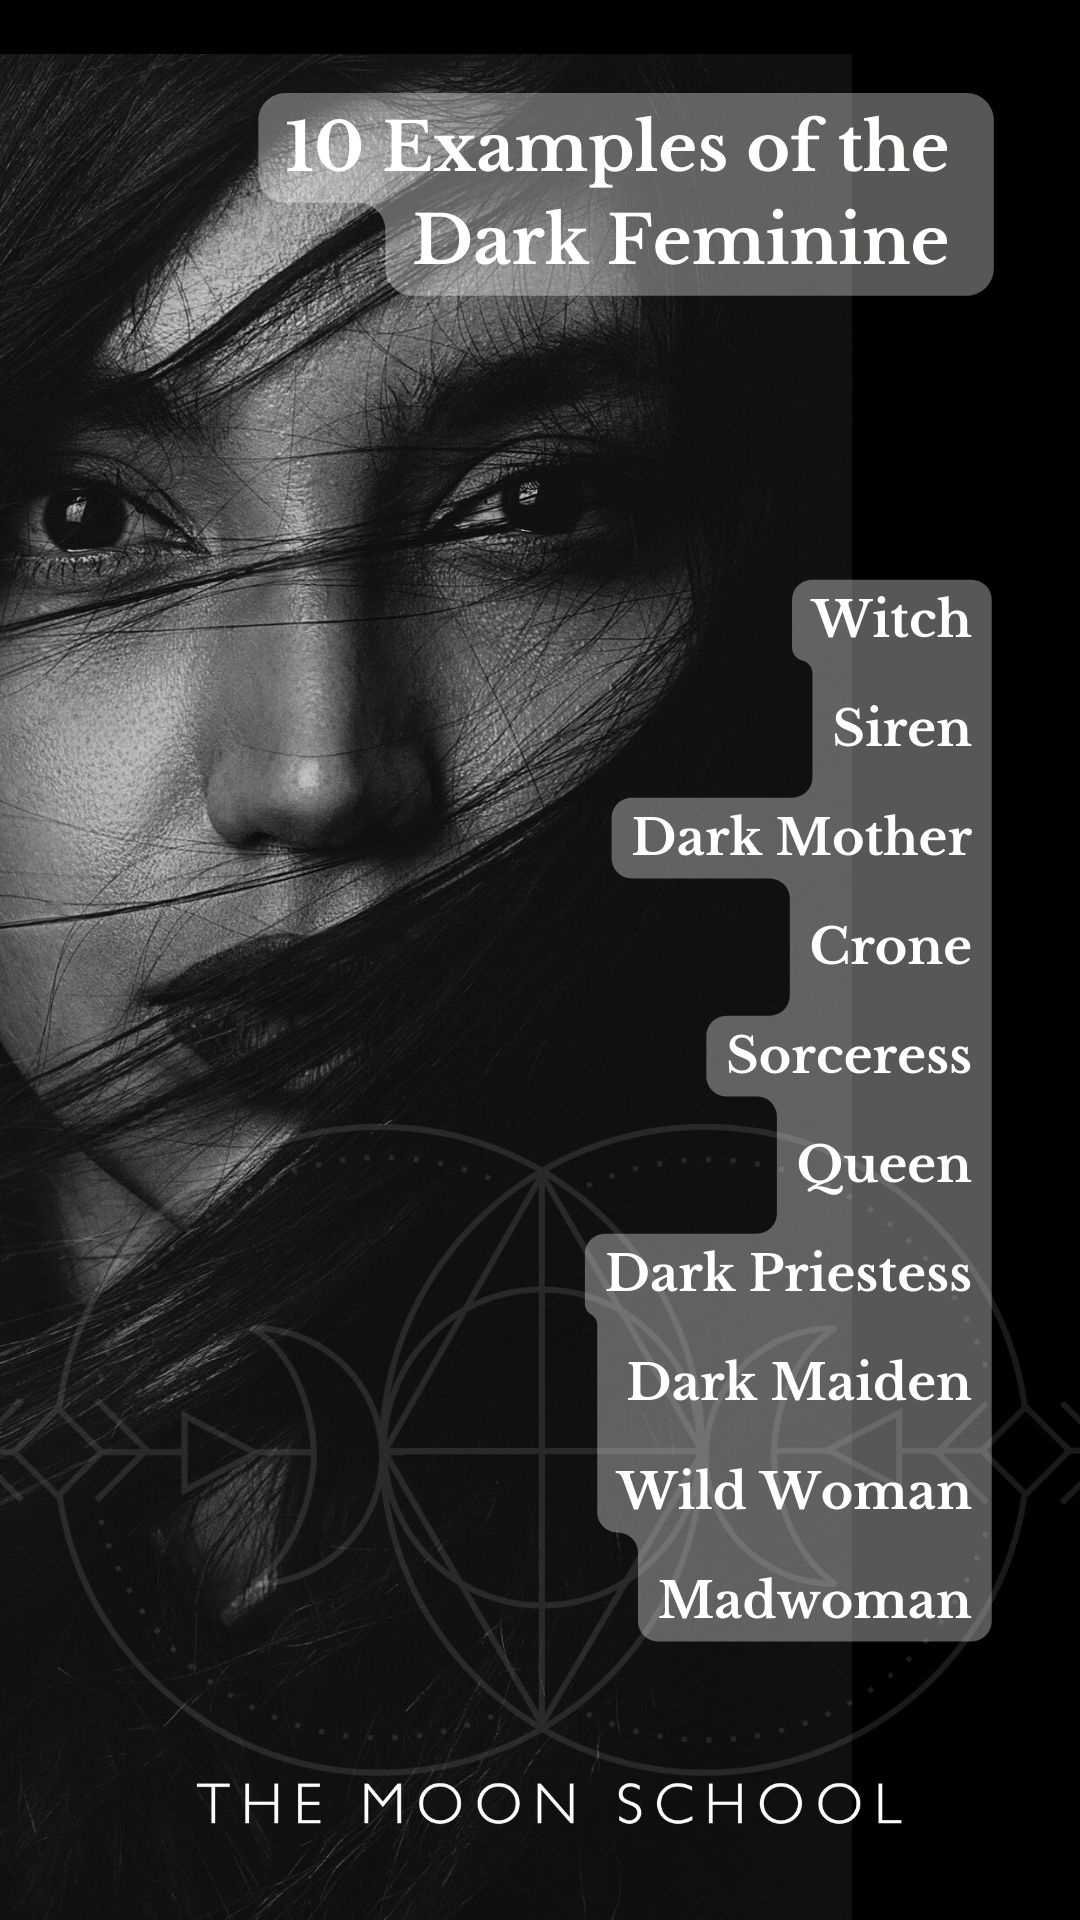 Pin with a list of dark feminine archetypes